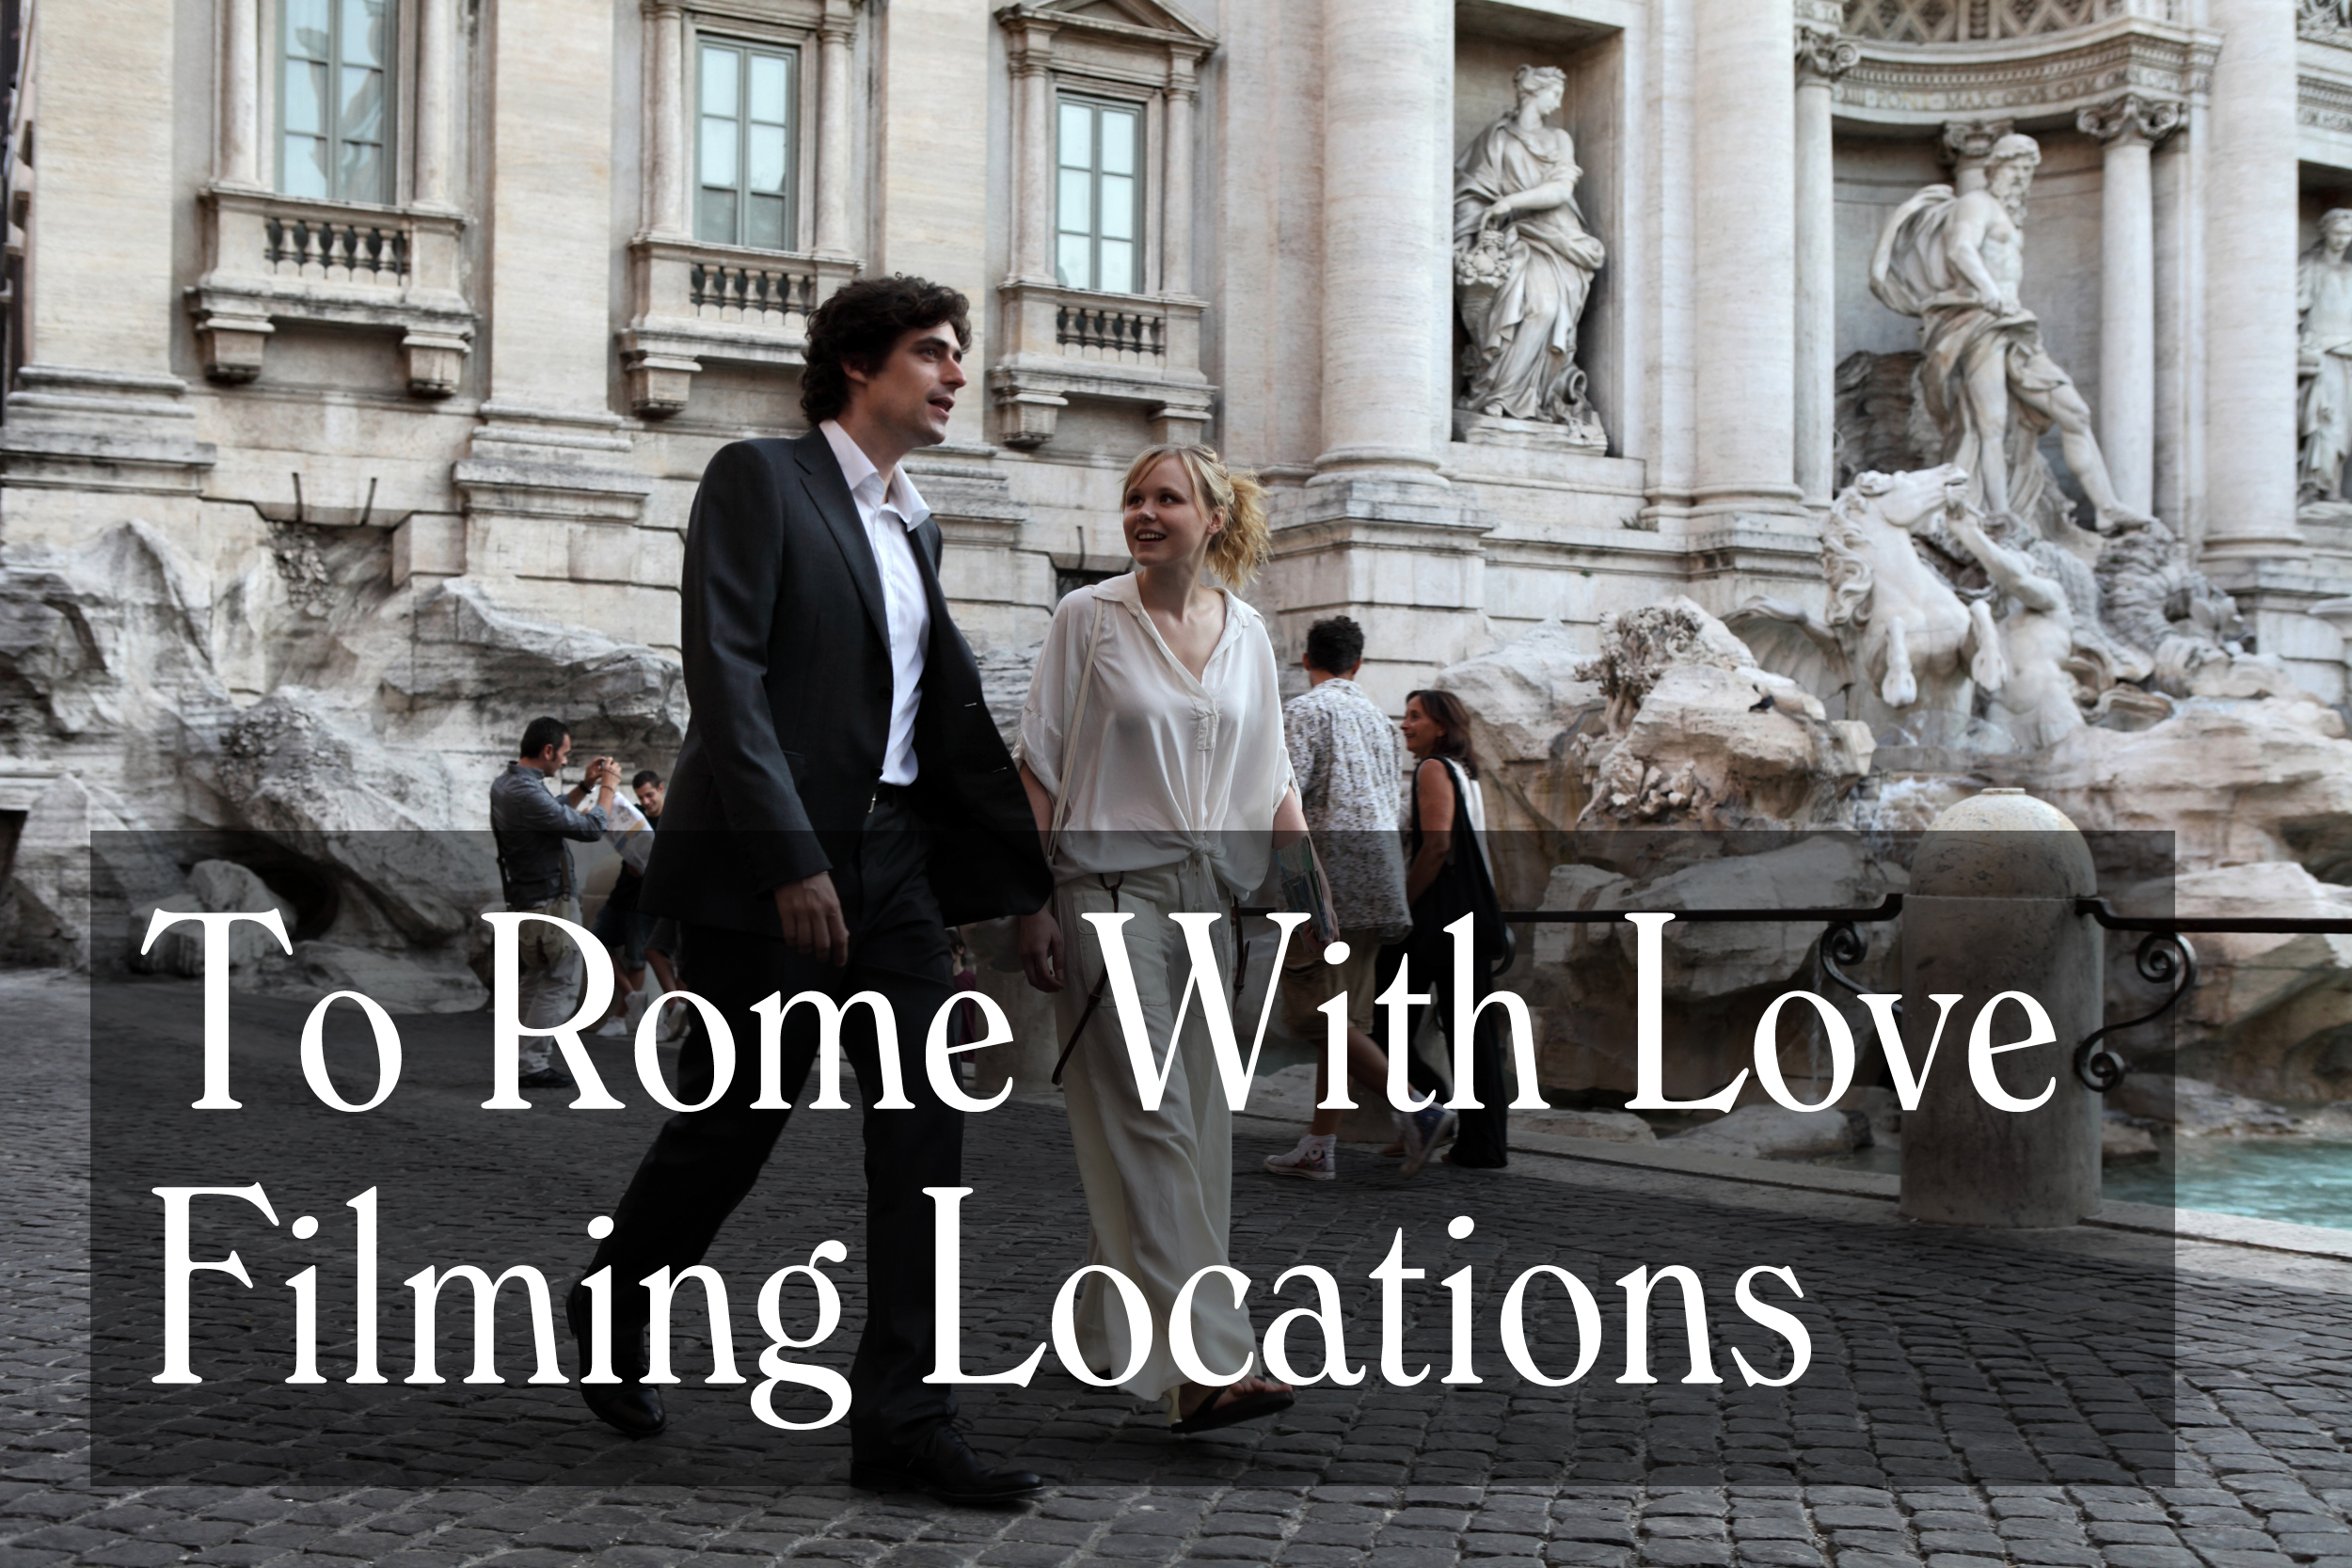 Sex in the movies scenes in Rome